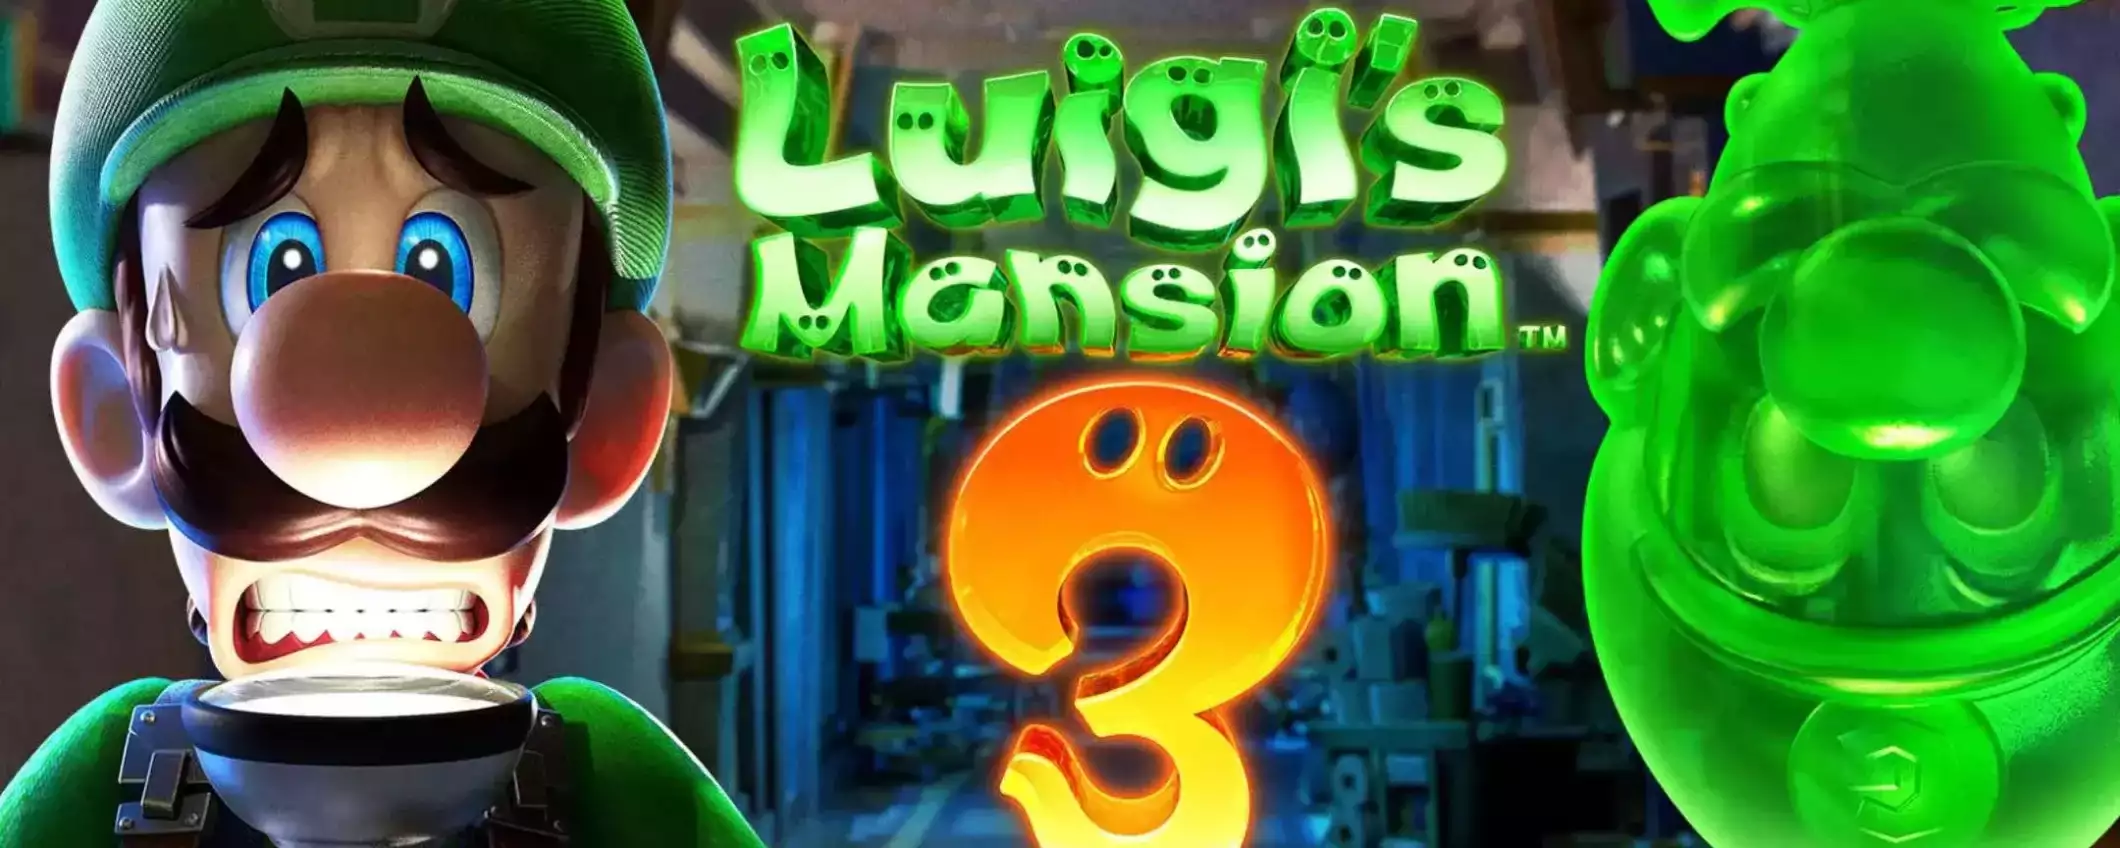 Luigi's Mansion 3: sconto FOLLE del 32% su Amazon, correte a prenderlo